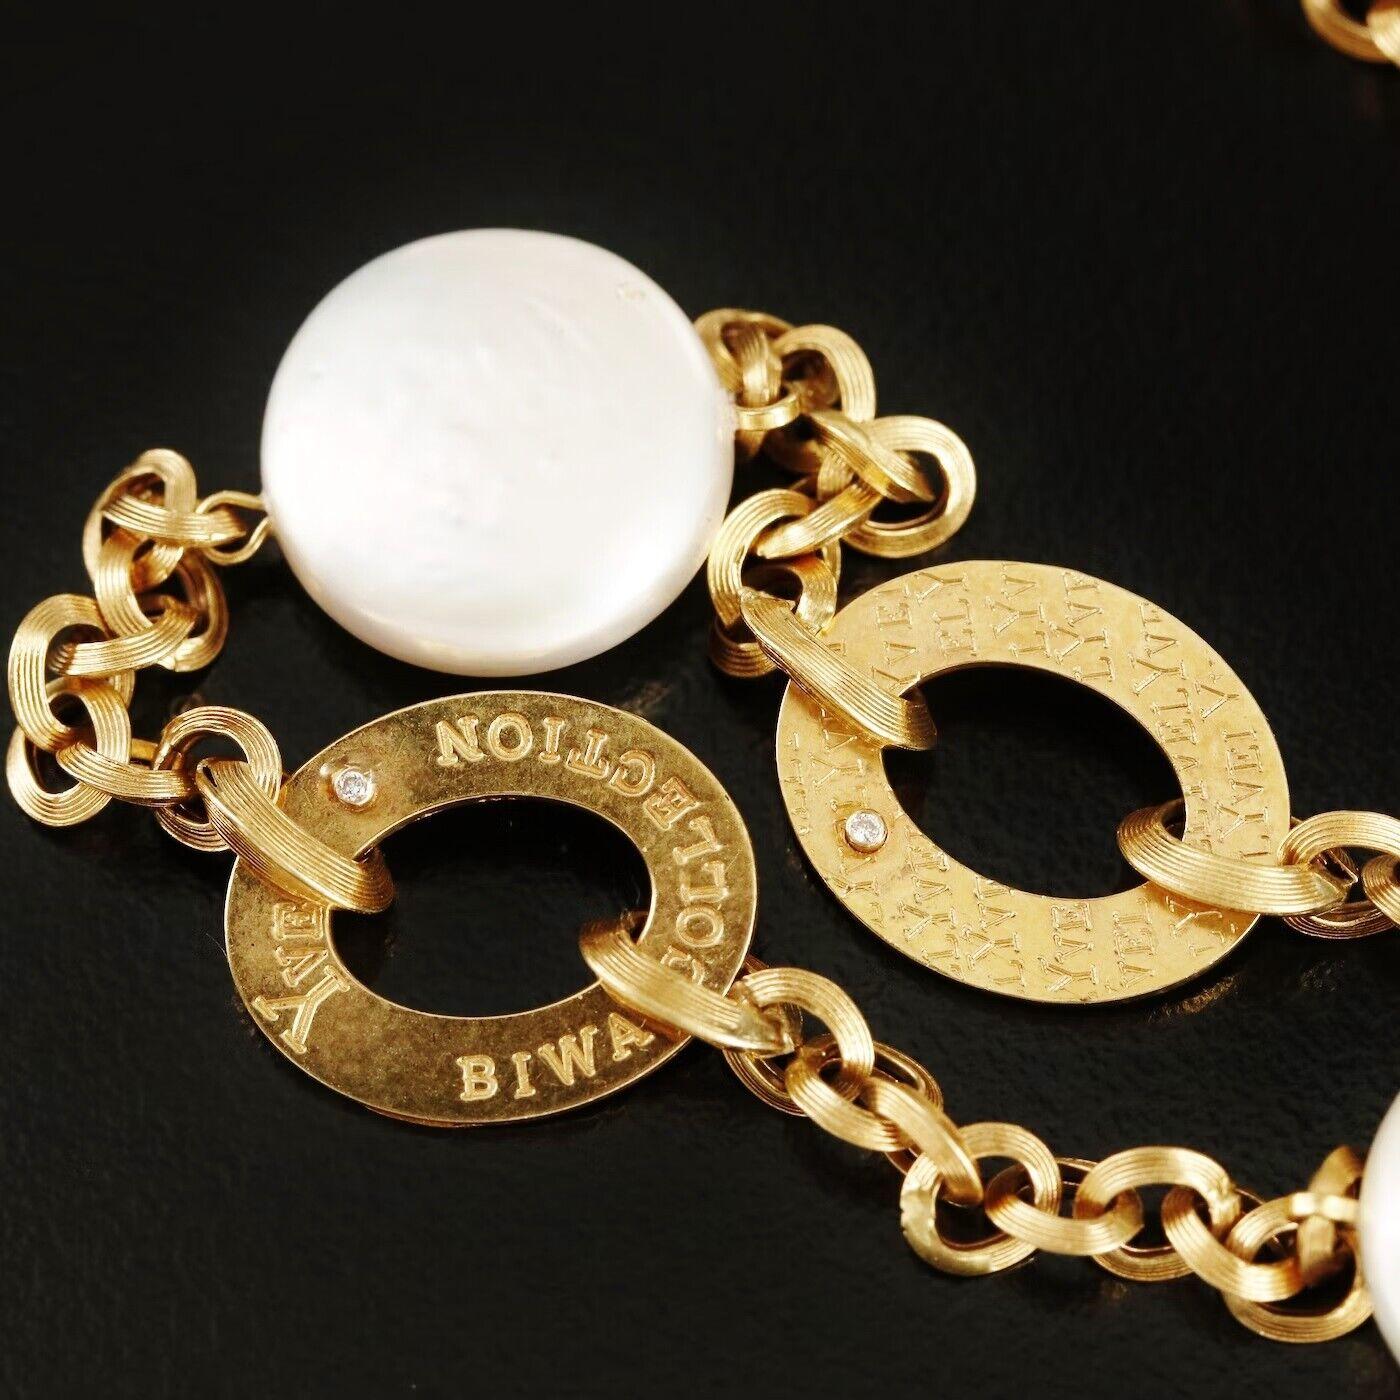 $9750 / Yvel Biwa Coin Pearl Diamond Statin Necklace / 18k Gold 1